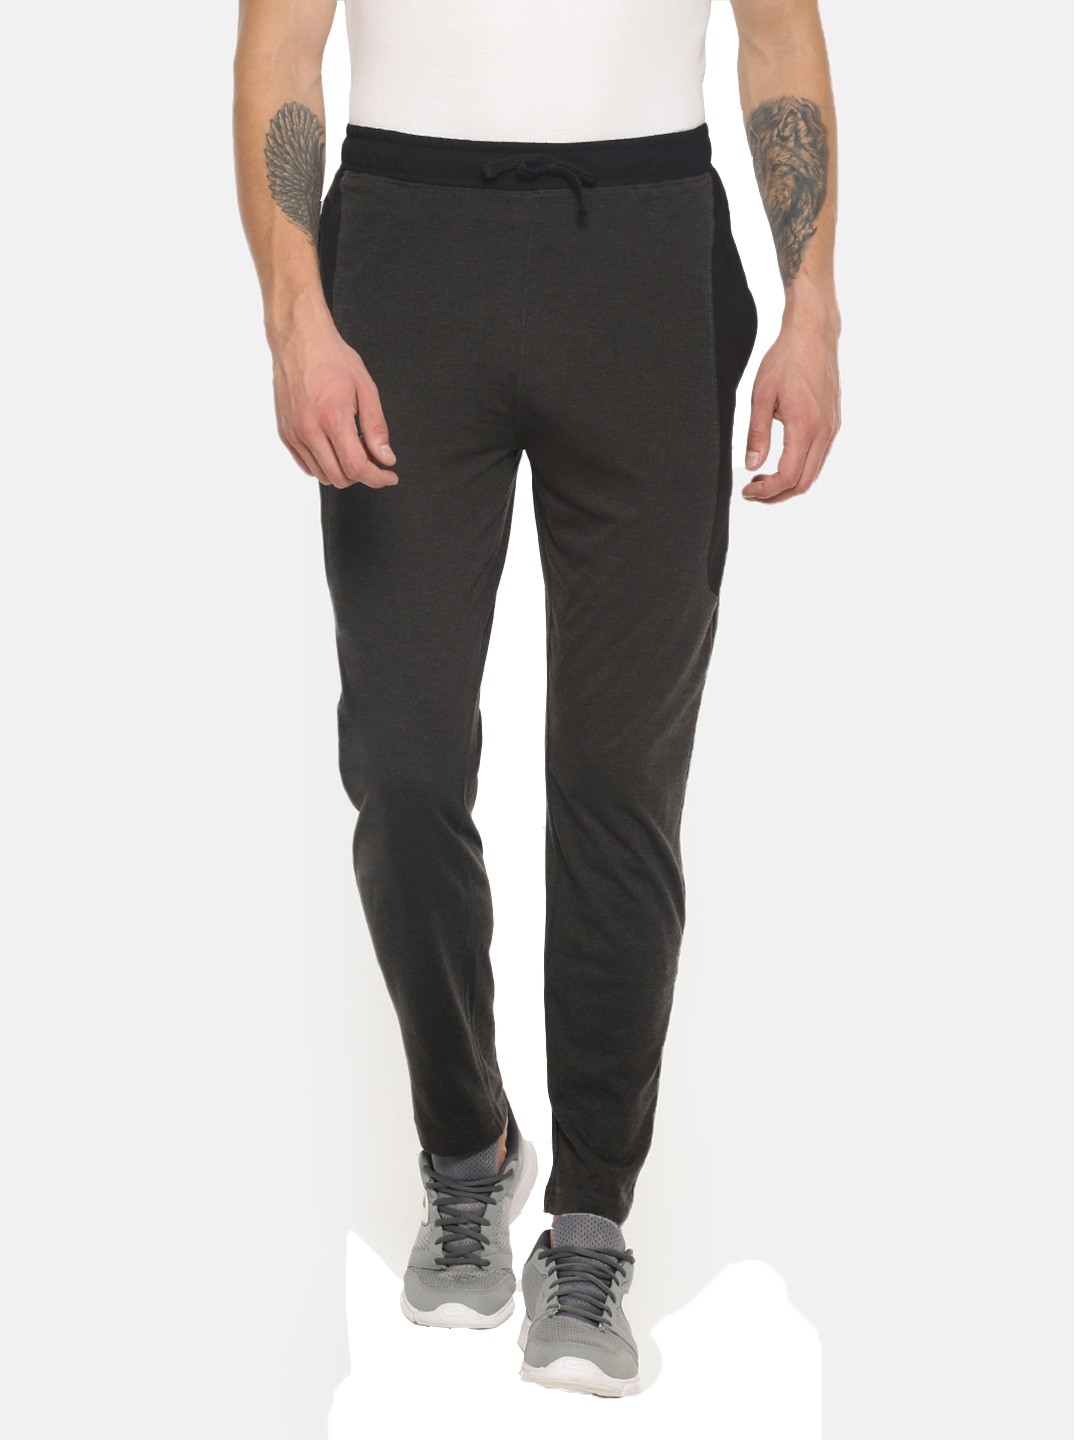 Buy PROLINE Navy Solid Cotton Regular Fit Men's Track Pants | Shoppers Stop